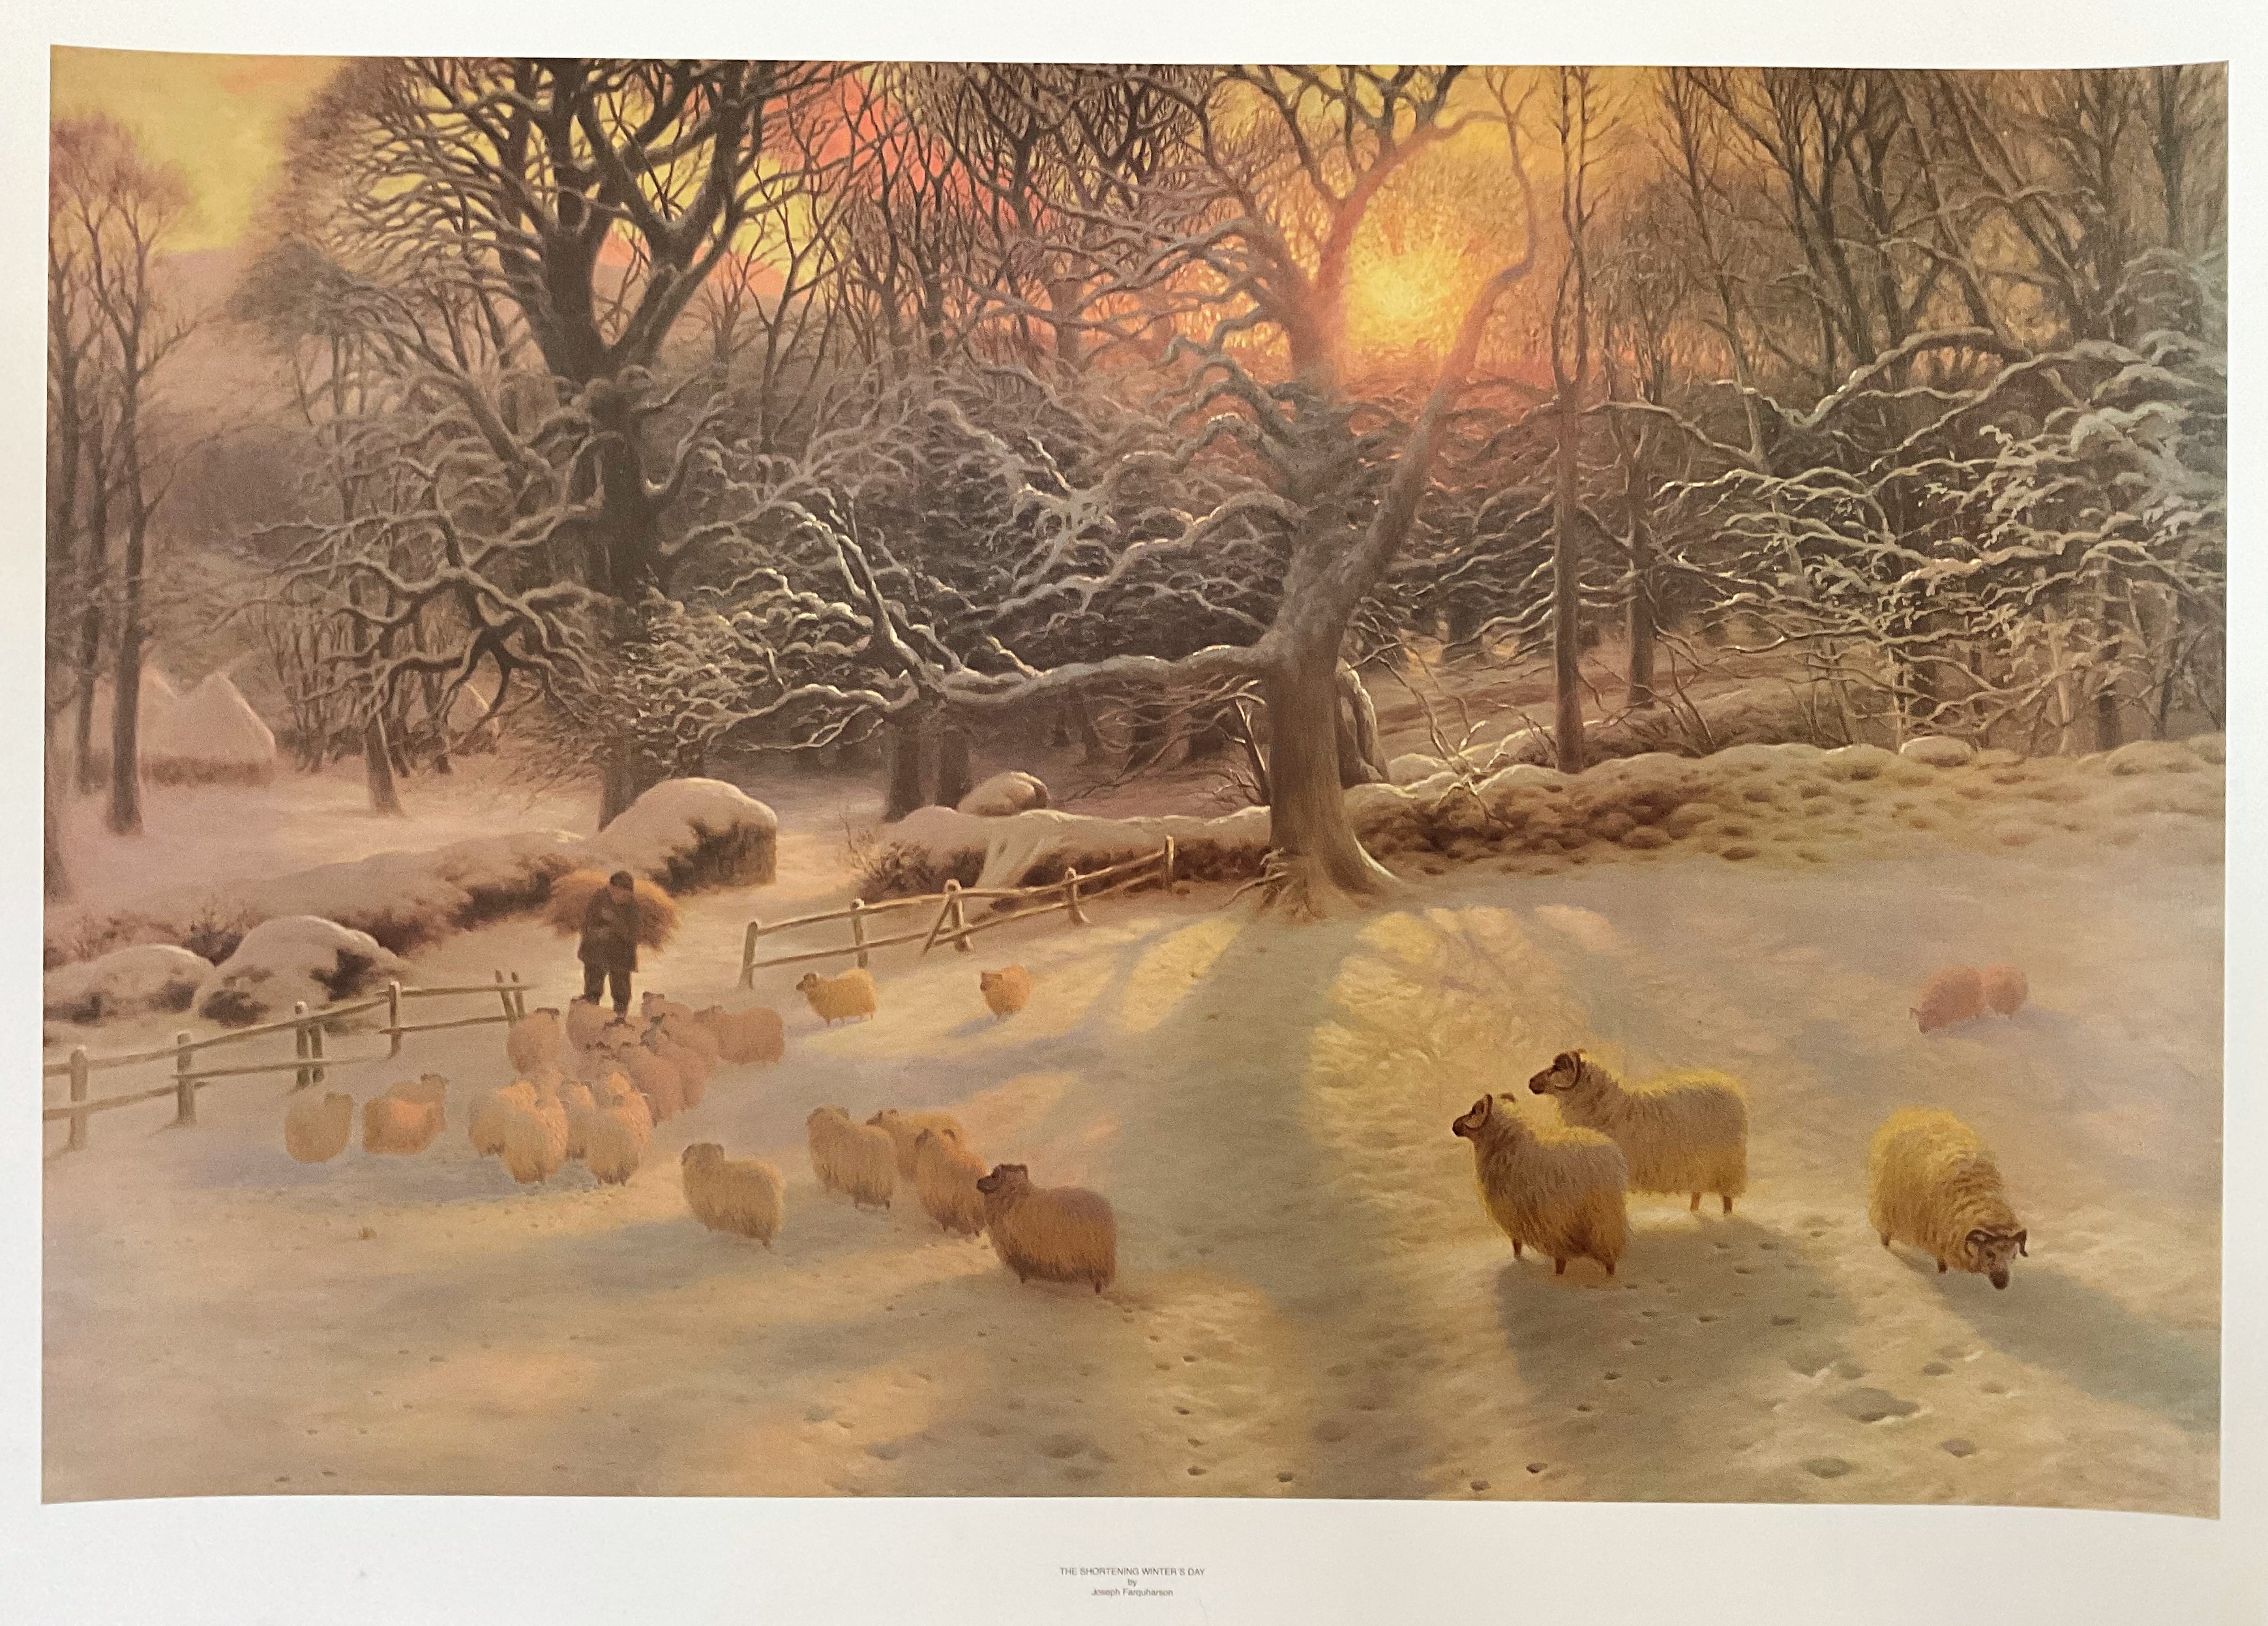 Joseph Farquharson 32x24 Colour Print Titled 'The Shortening Winter's Day'. Good Condition. All